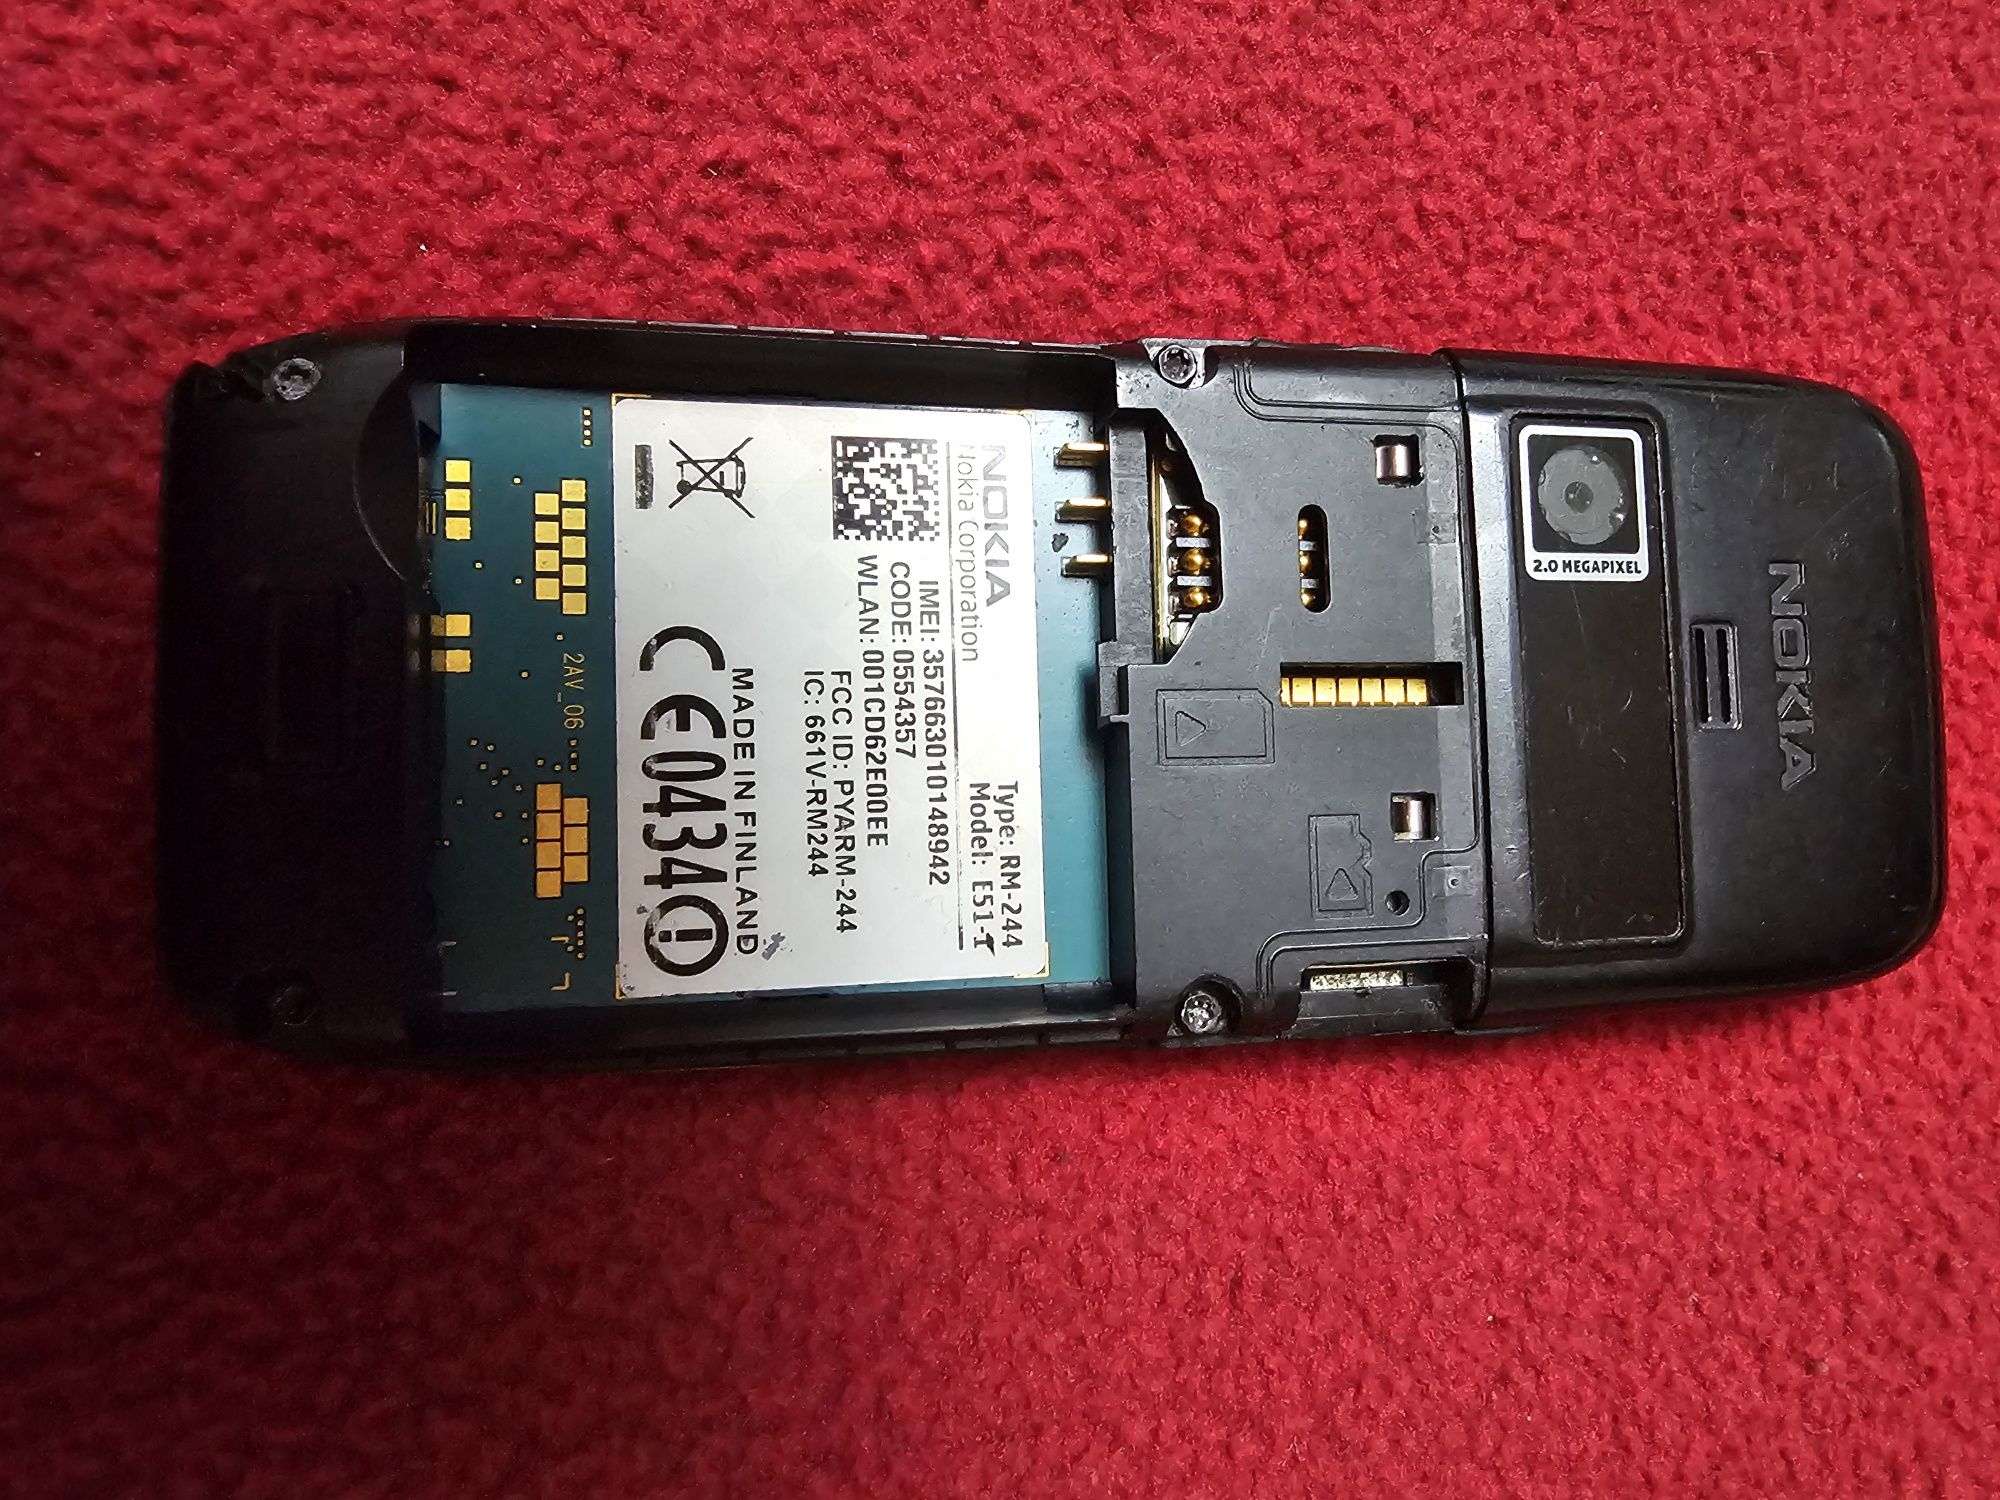 Лот Стари  телефони Nokia E51 Sharp Sony Ericsson,Panasonic,Motorola